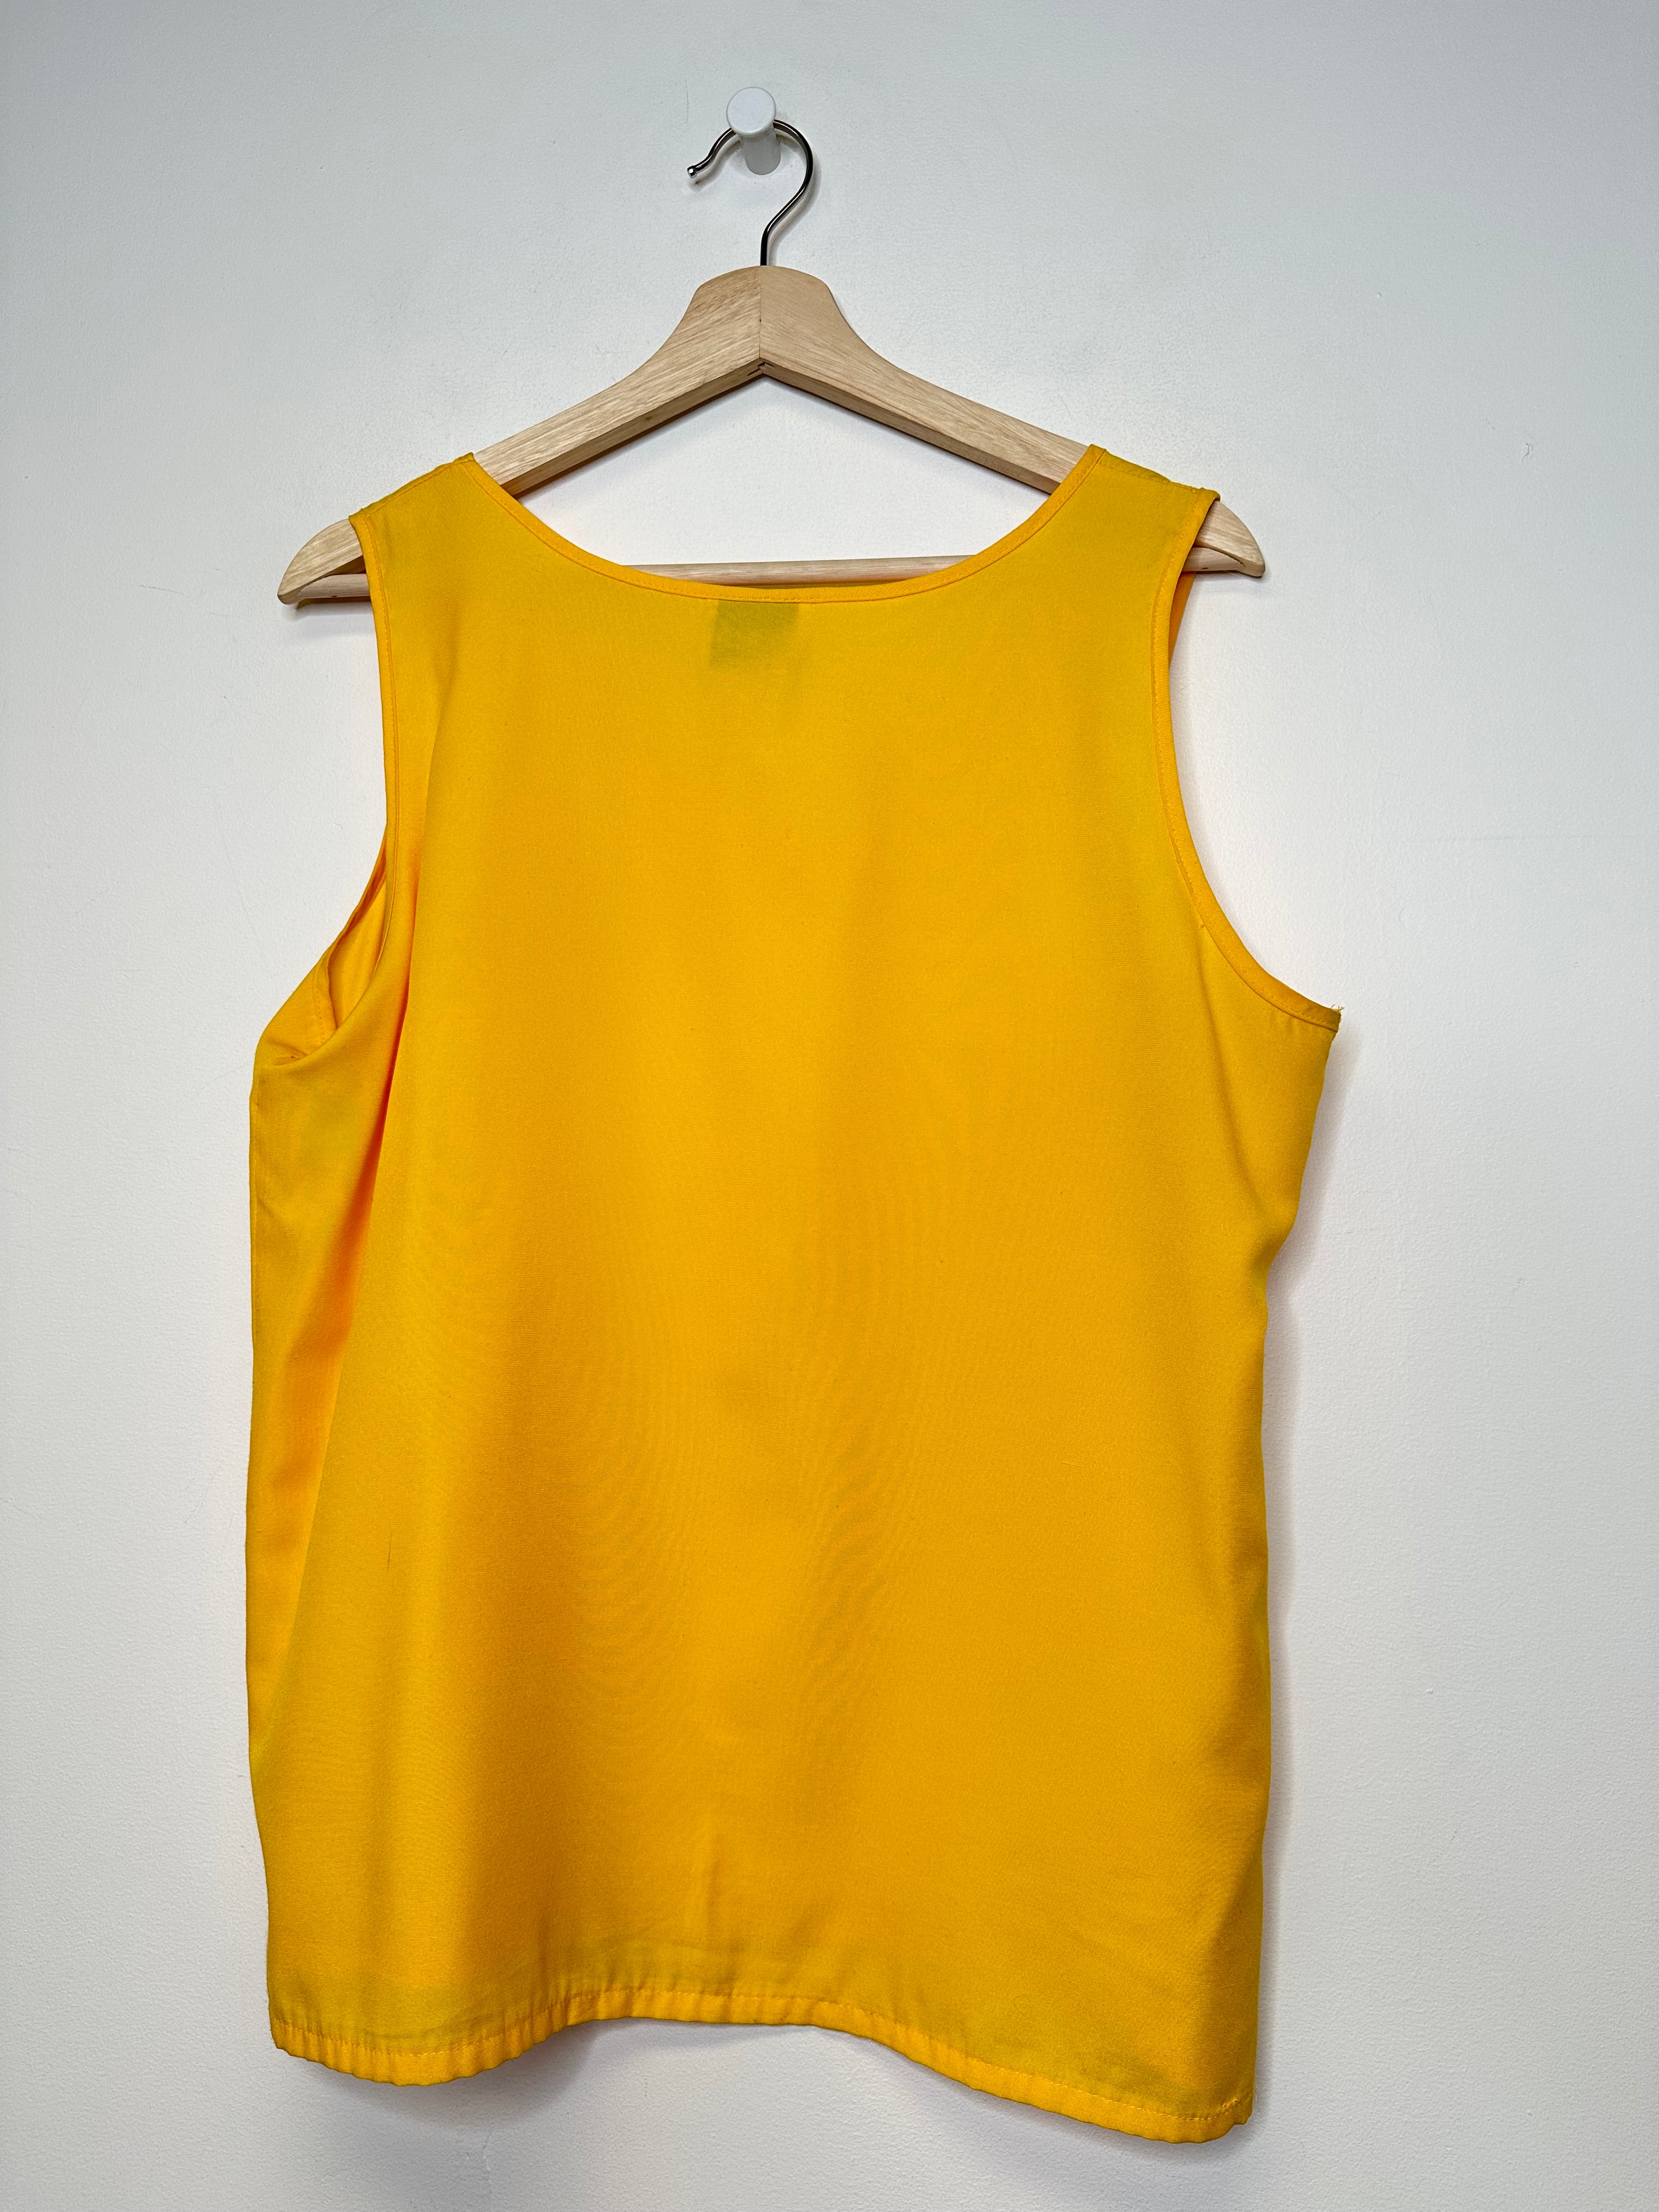 Vintage Yellow Sleeveless Top - L